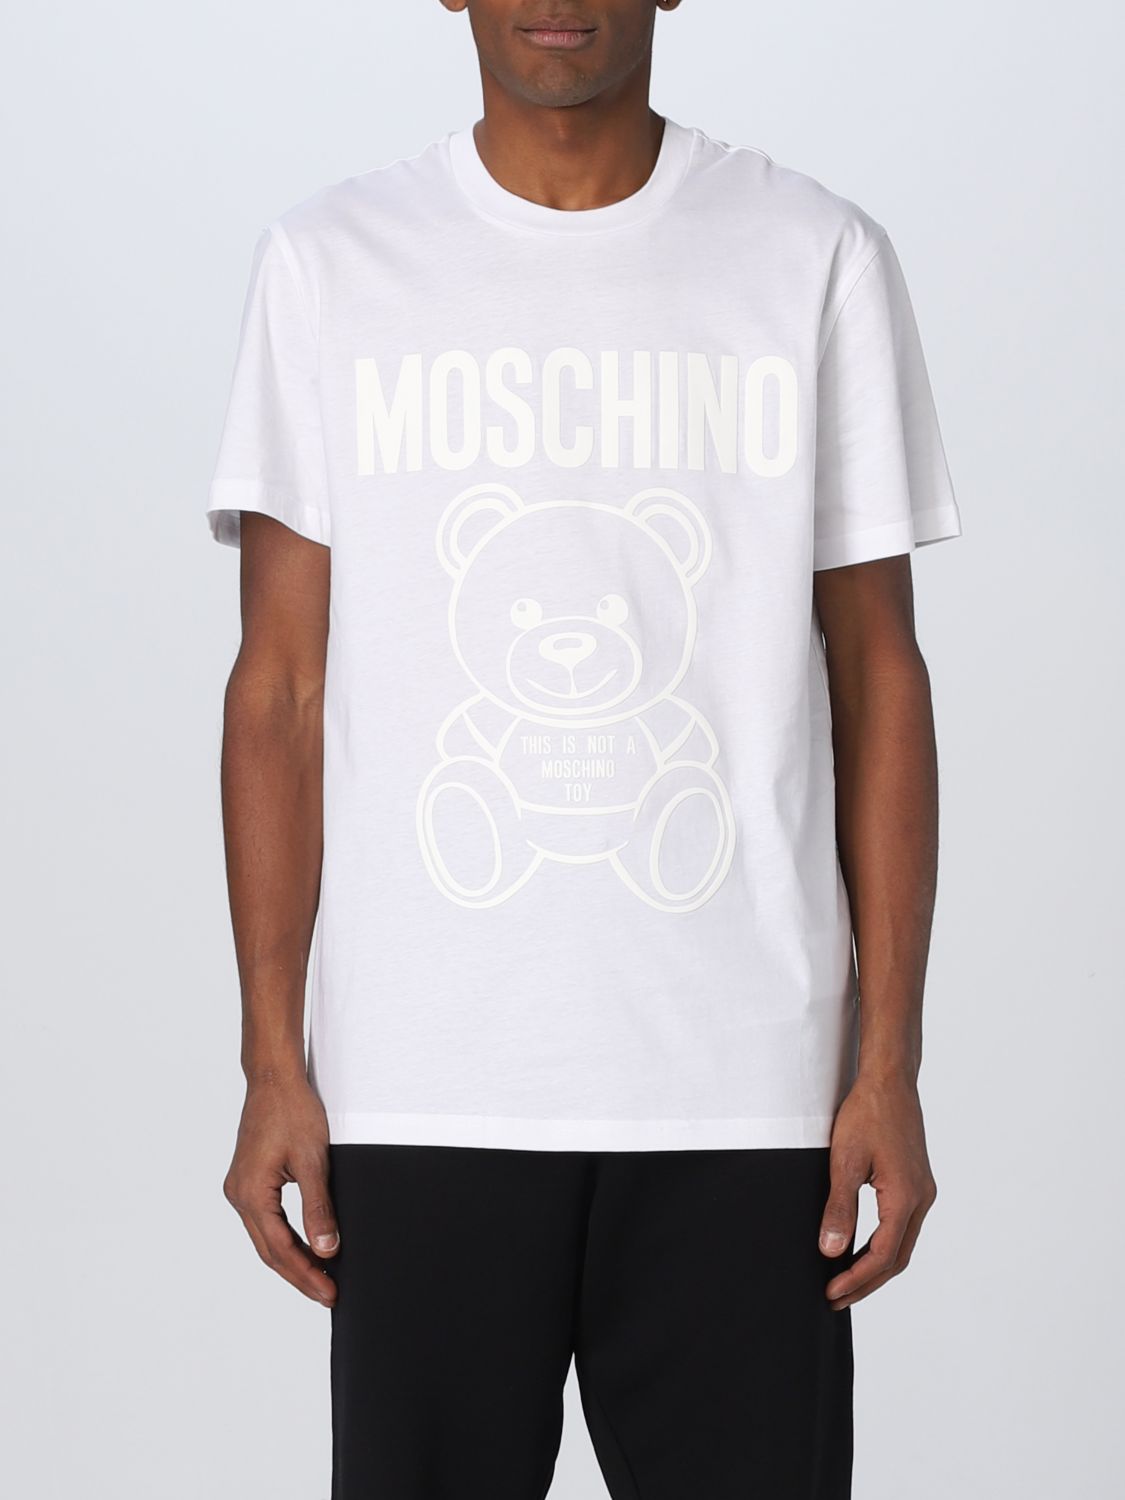 Moschino Couture T-shirt  Men Colour White